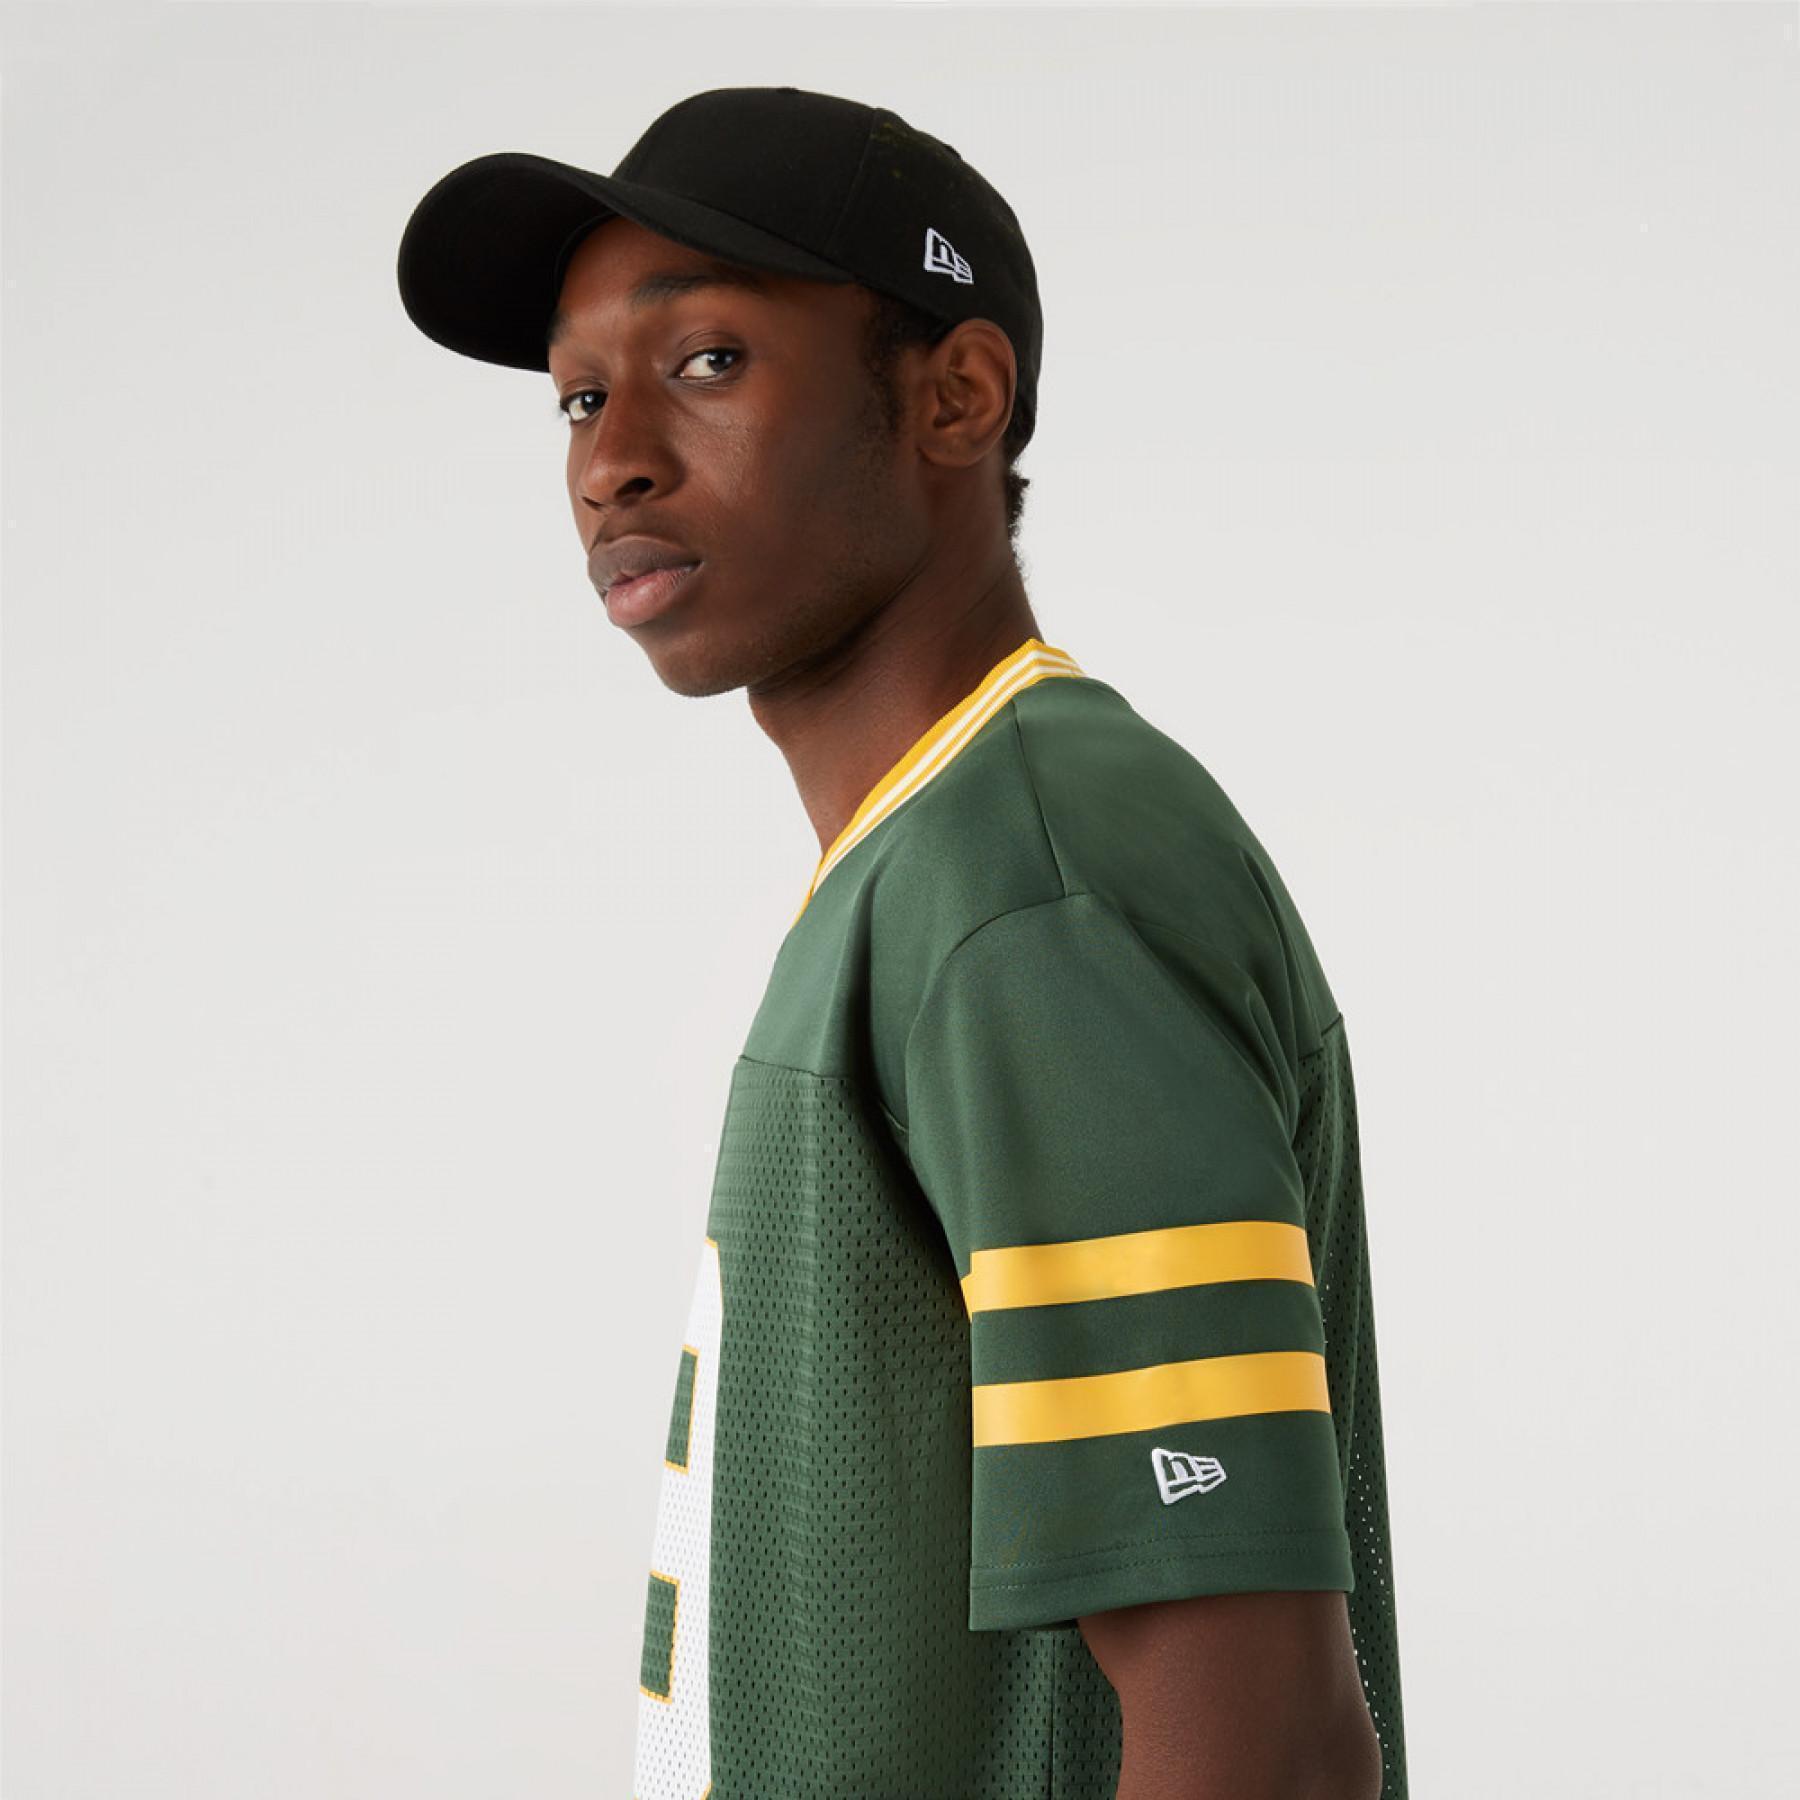 Camiseta New Era Green Bay Packers Oversize NFL Logo